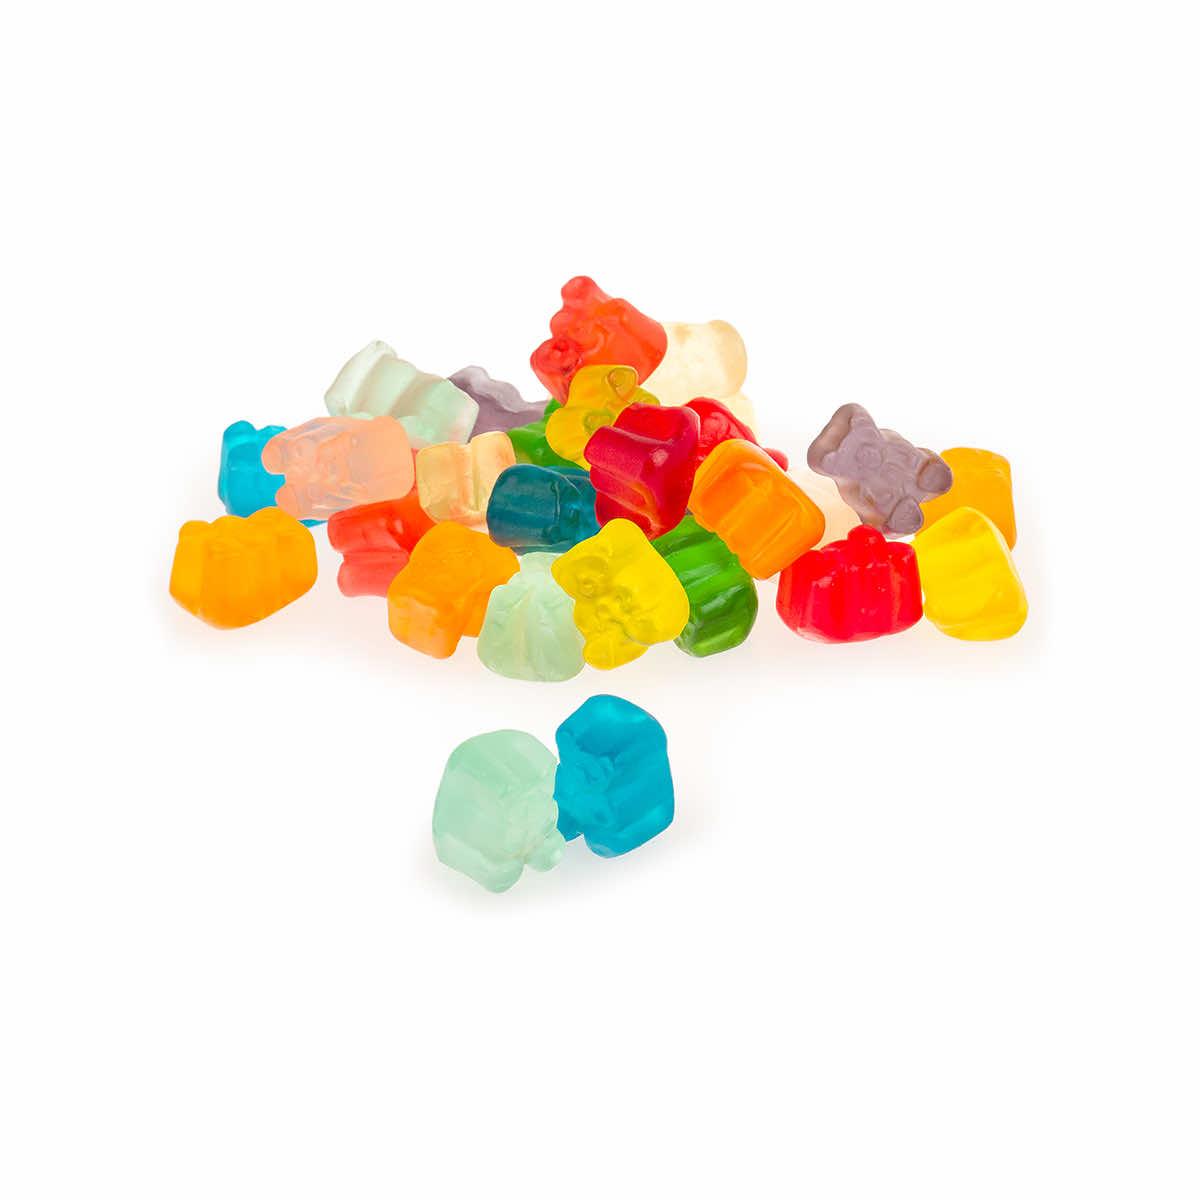  Assorted Gourmet Gummi Bears Candy - 1 Lb.